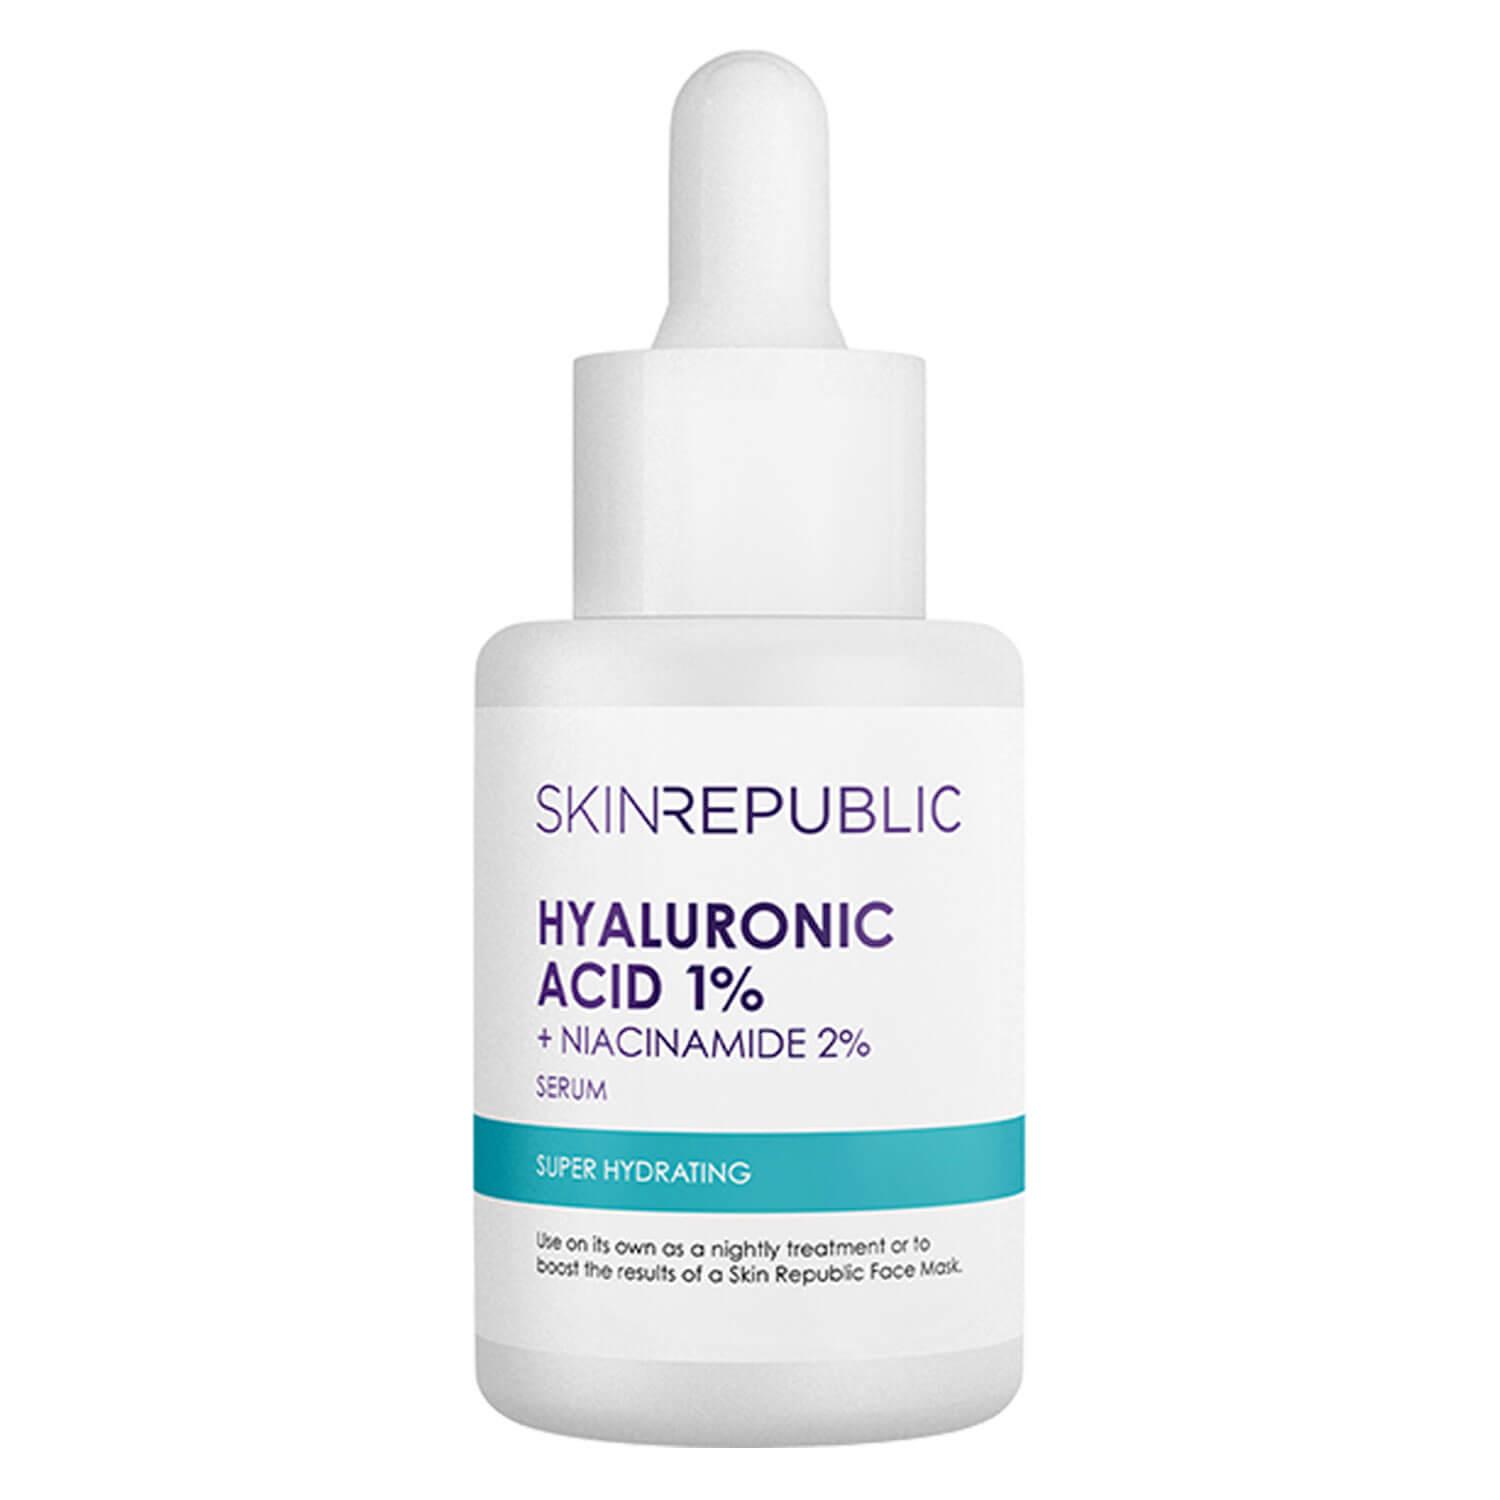 Skin Republic - Hyaluronic Acid 1% + Niacinamide 2% Serum